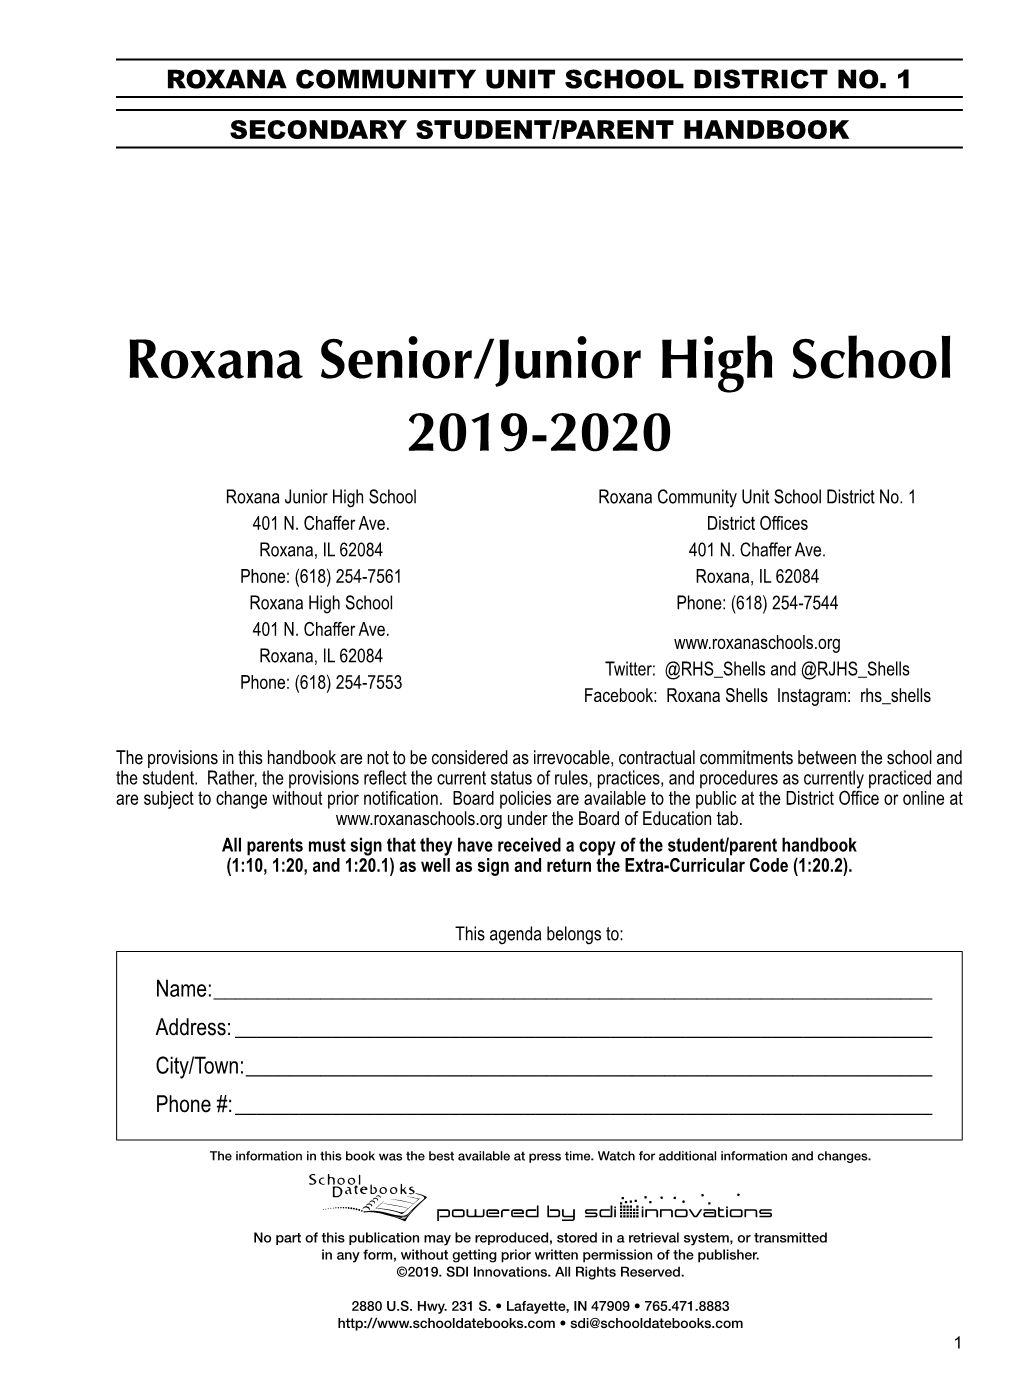 Roxana Senior/Junior High School 2019-2020